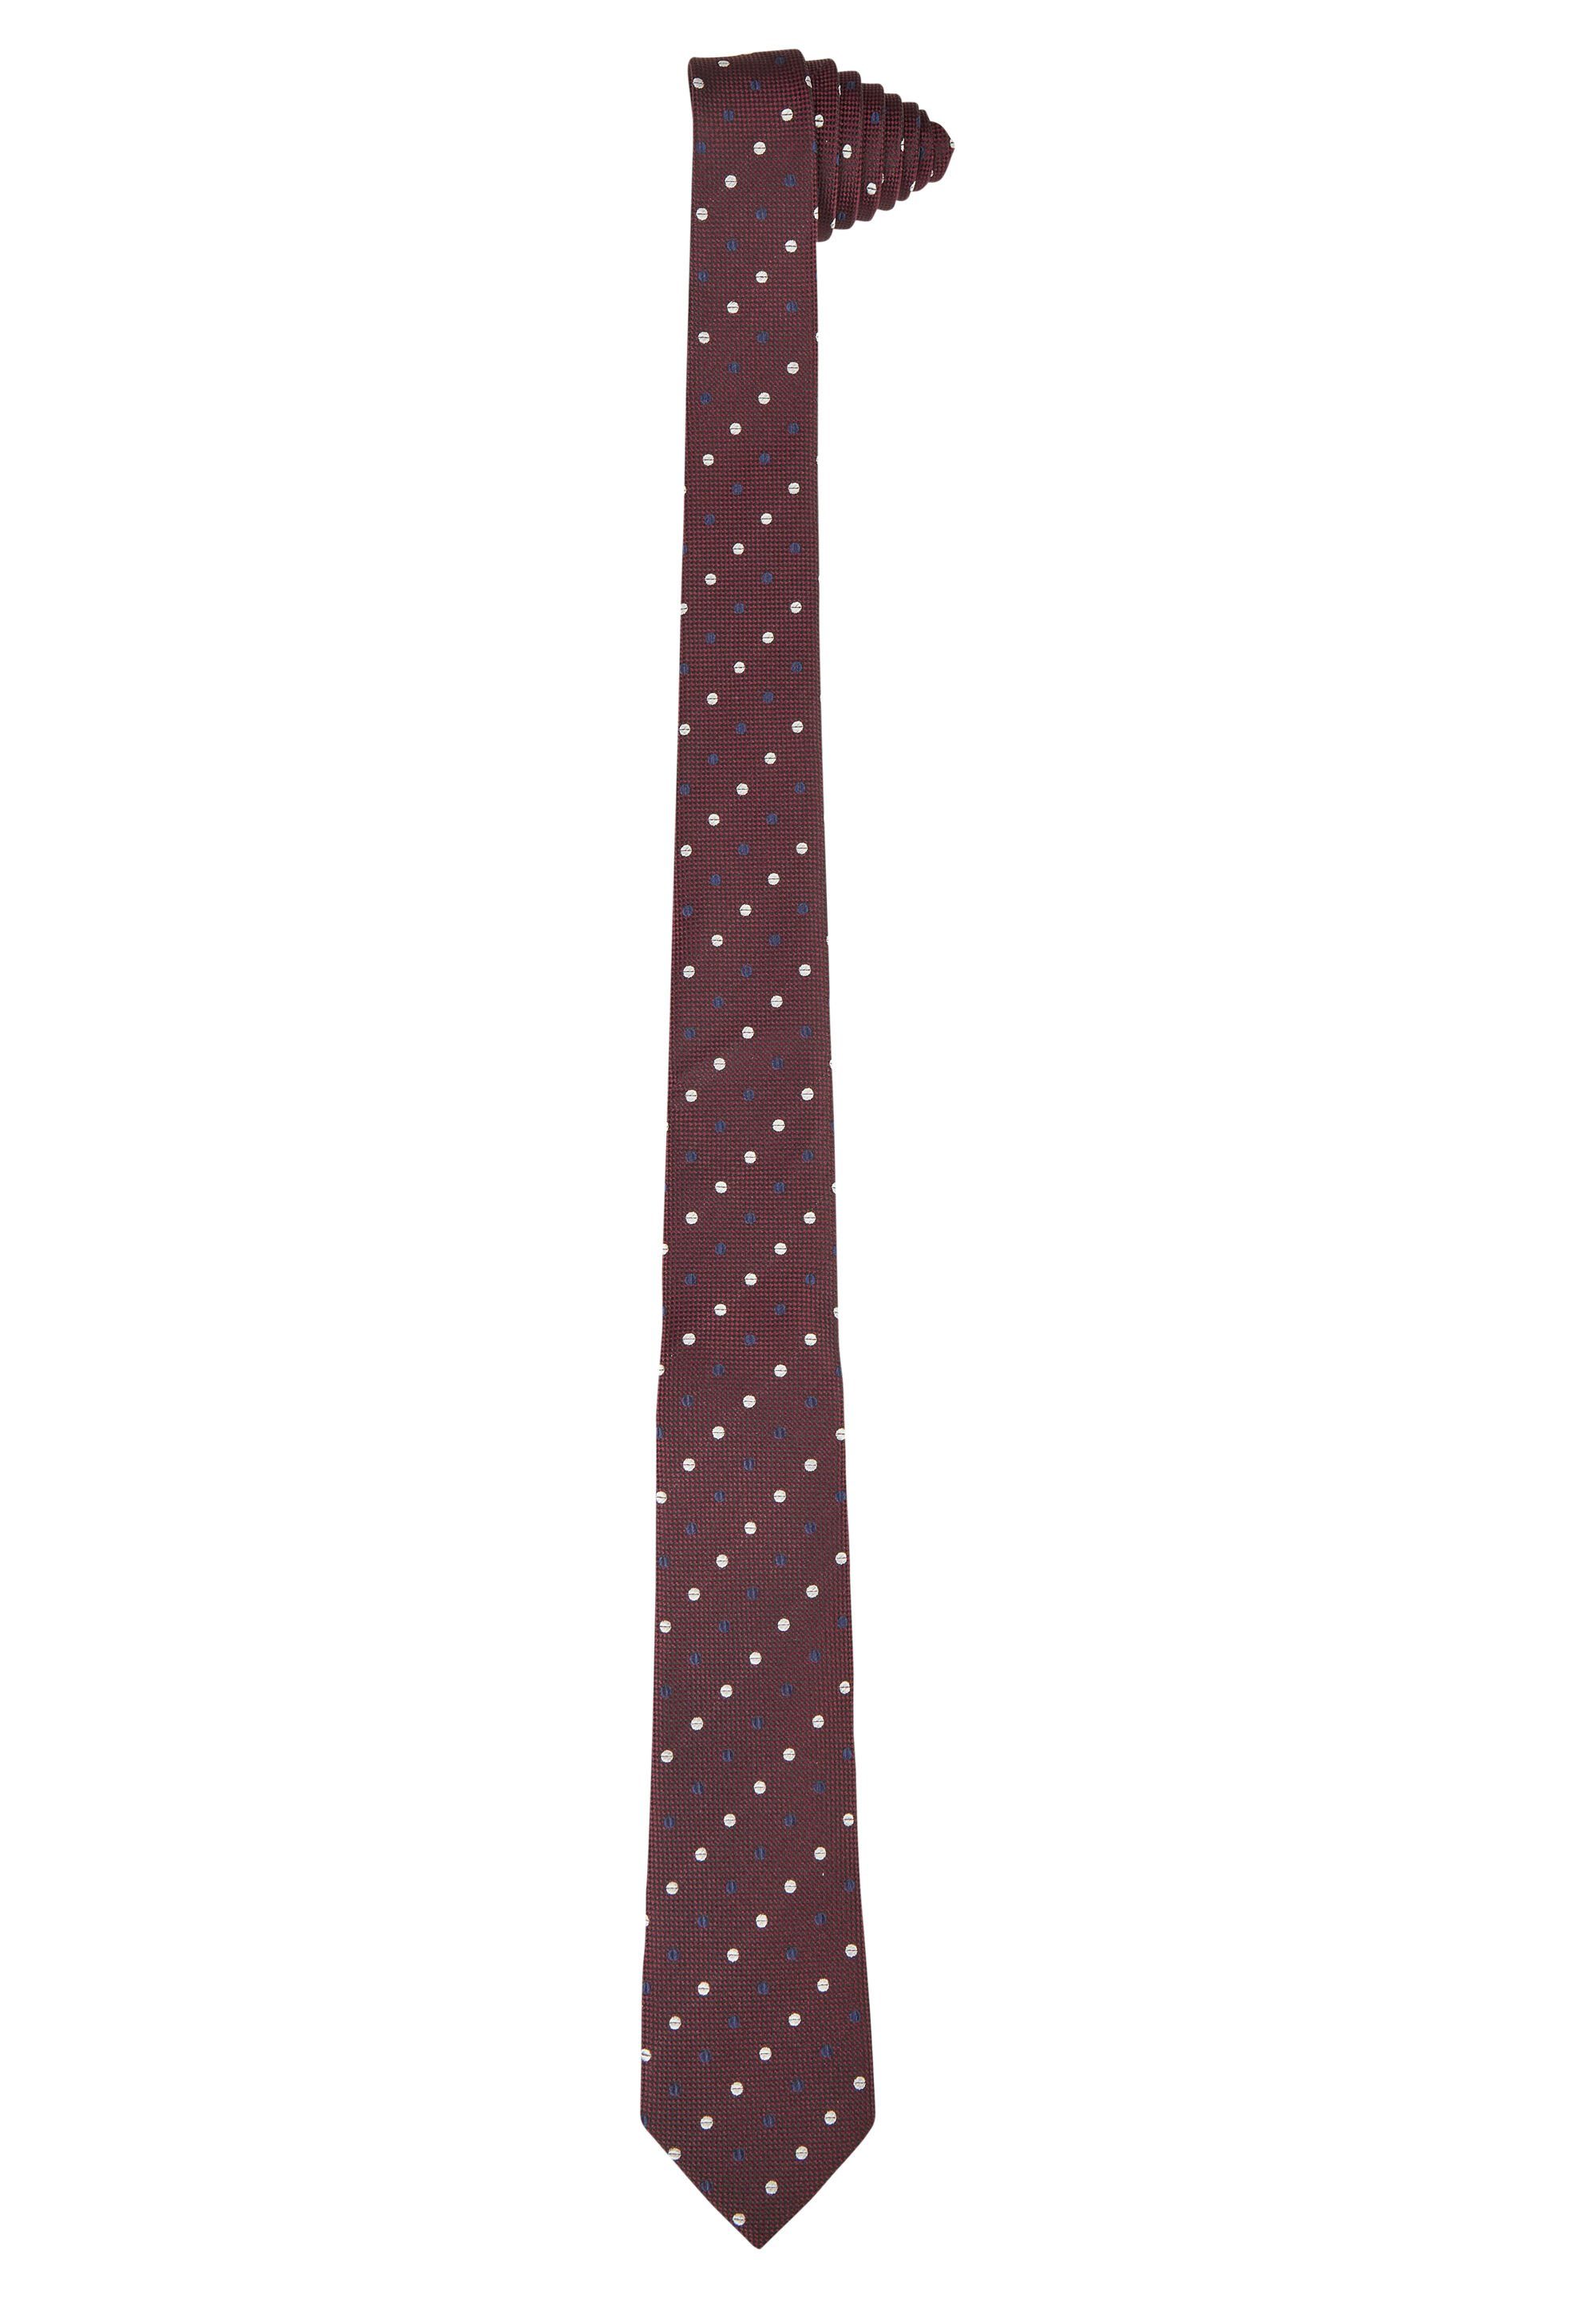 Krawatte oxblood mit HECHTER Muster modernem PARIS